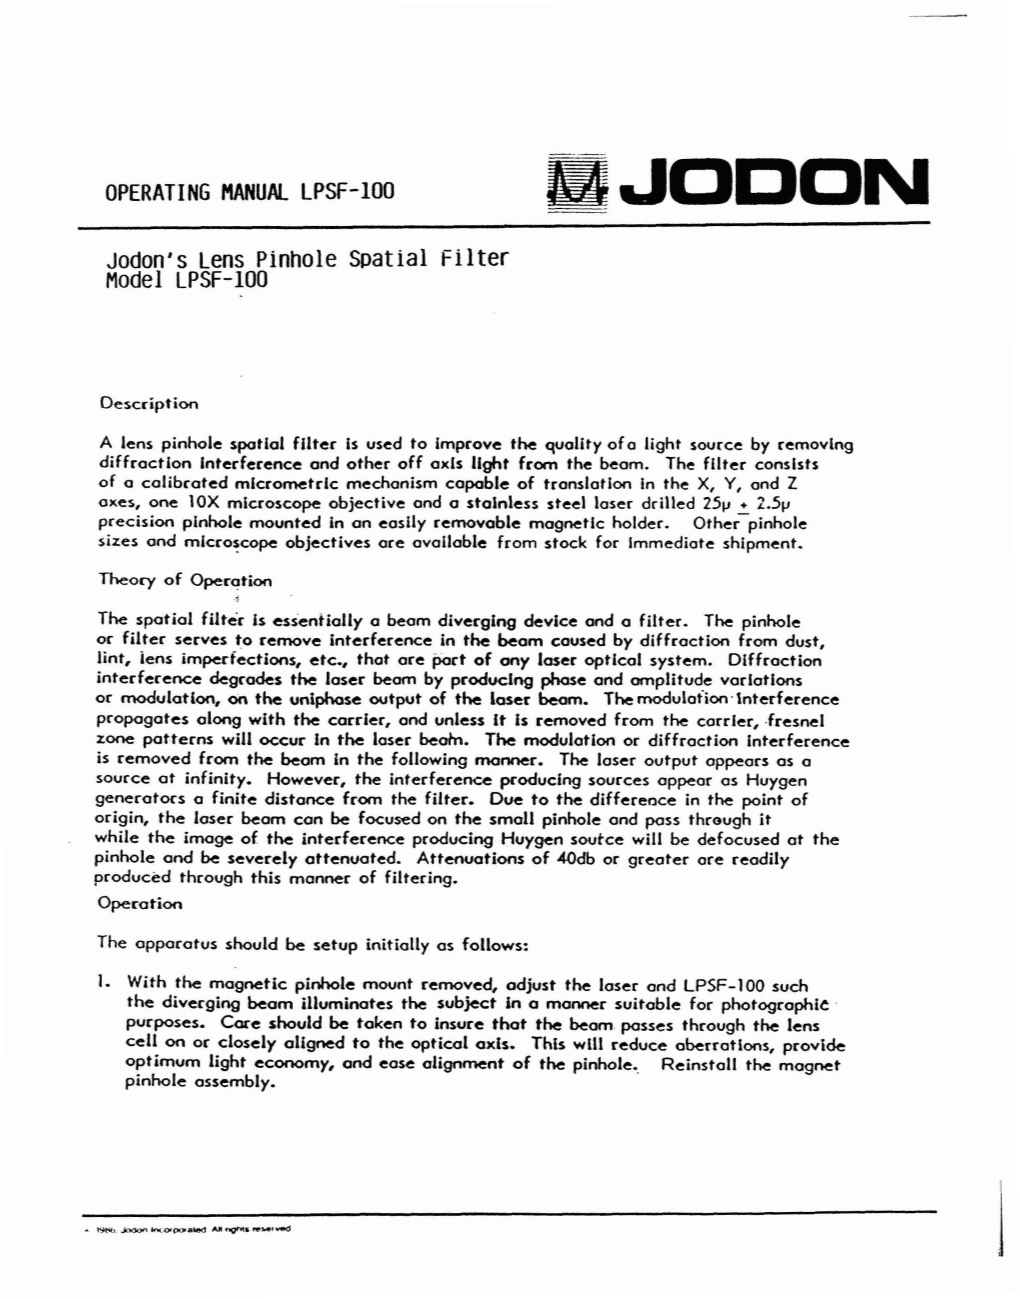 Jodon's Lens Pinhole Spatial Filter Model LPSF-100